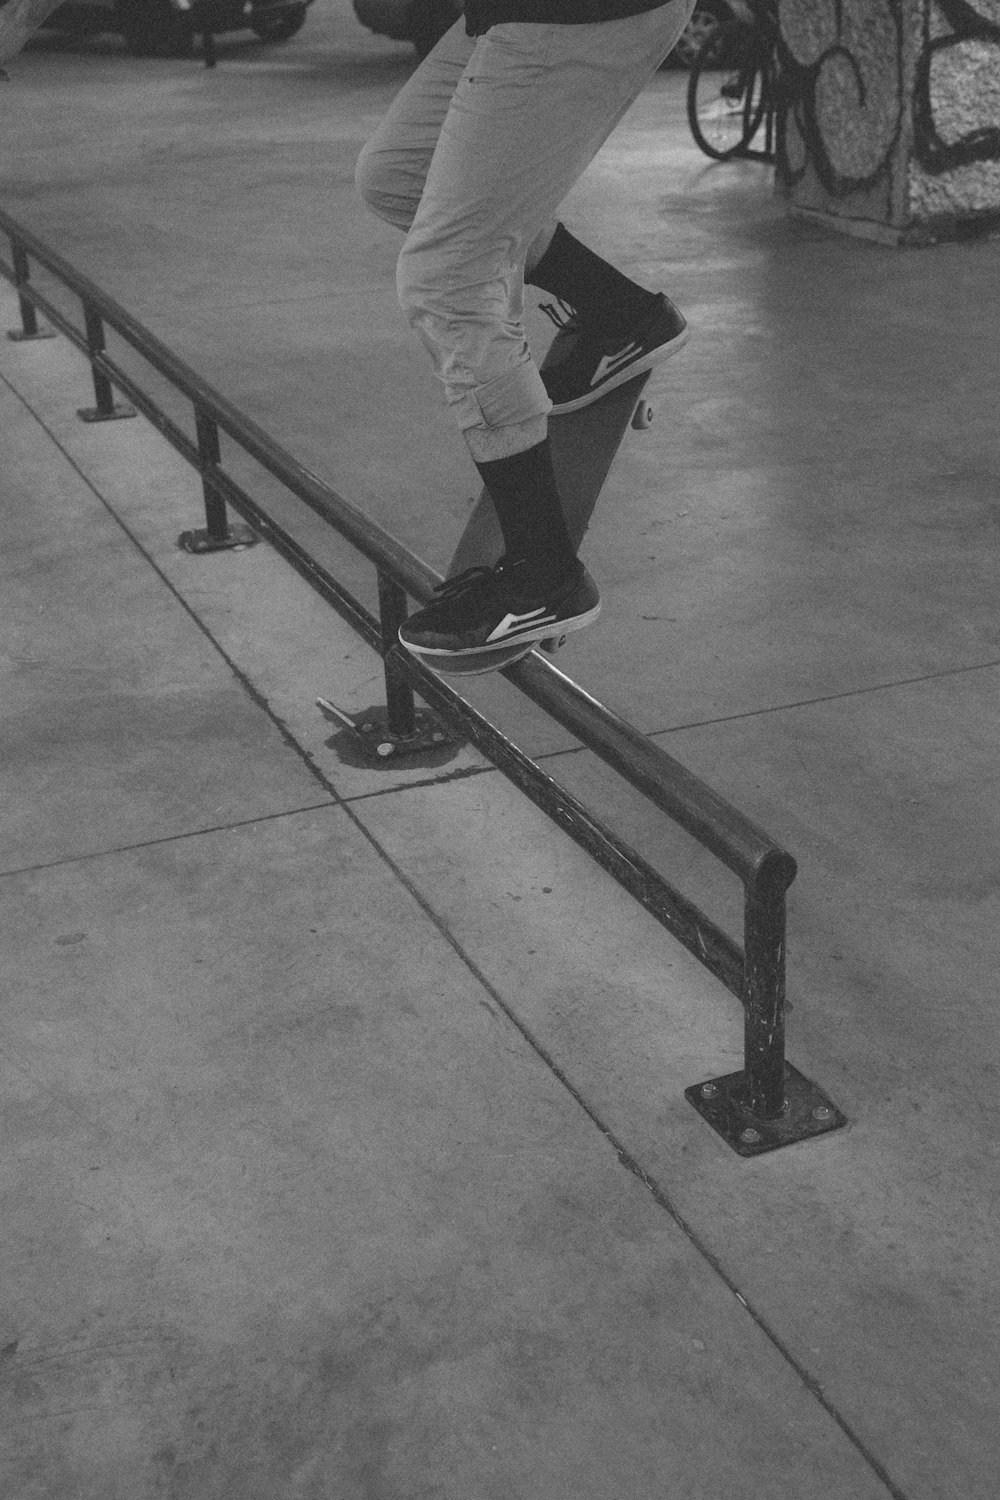 man riding on the skateboard photograph